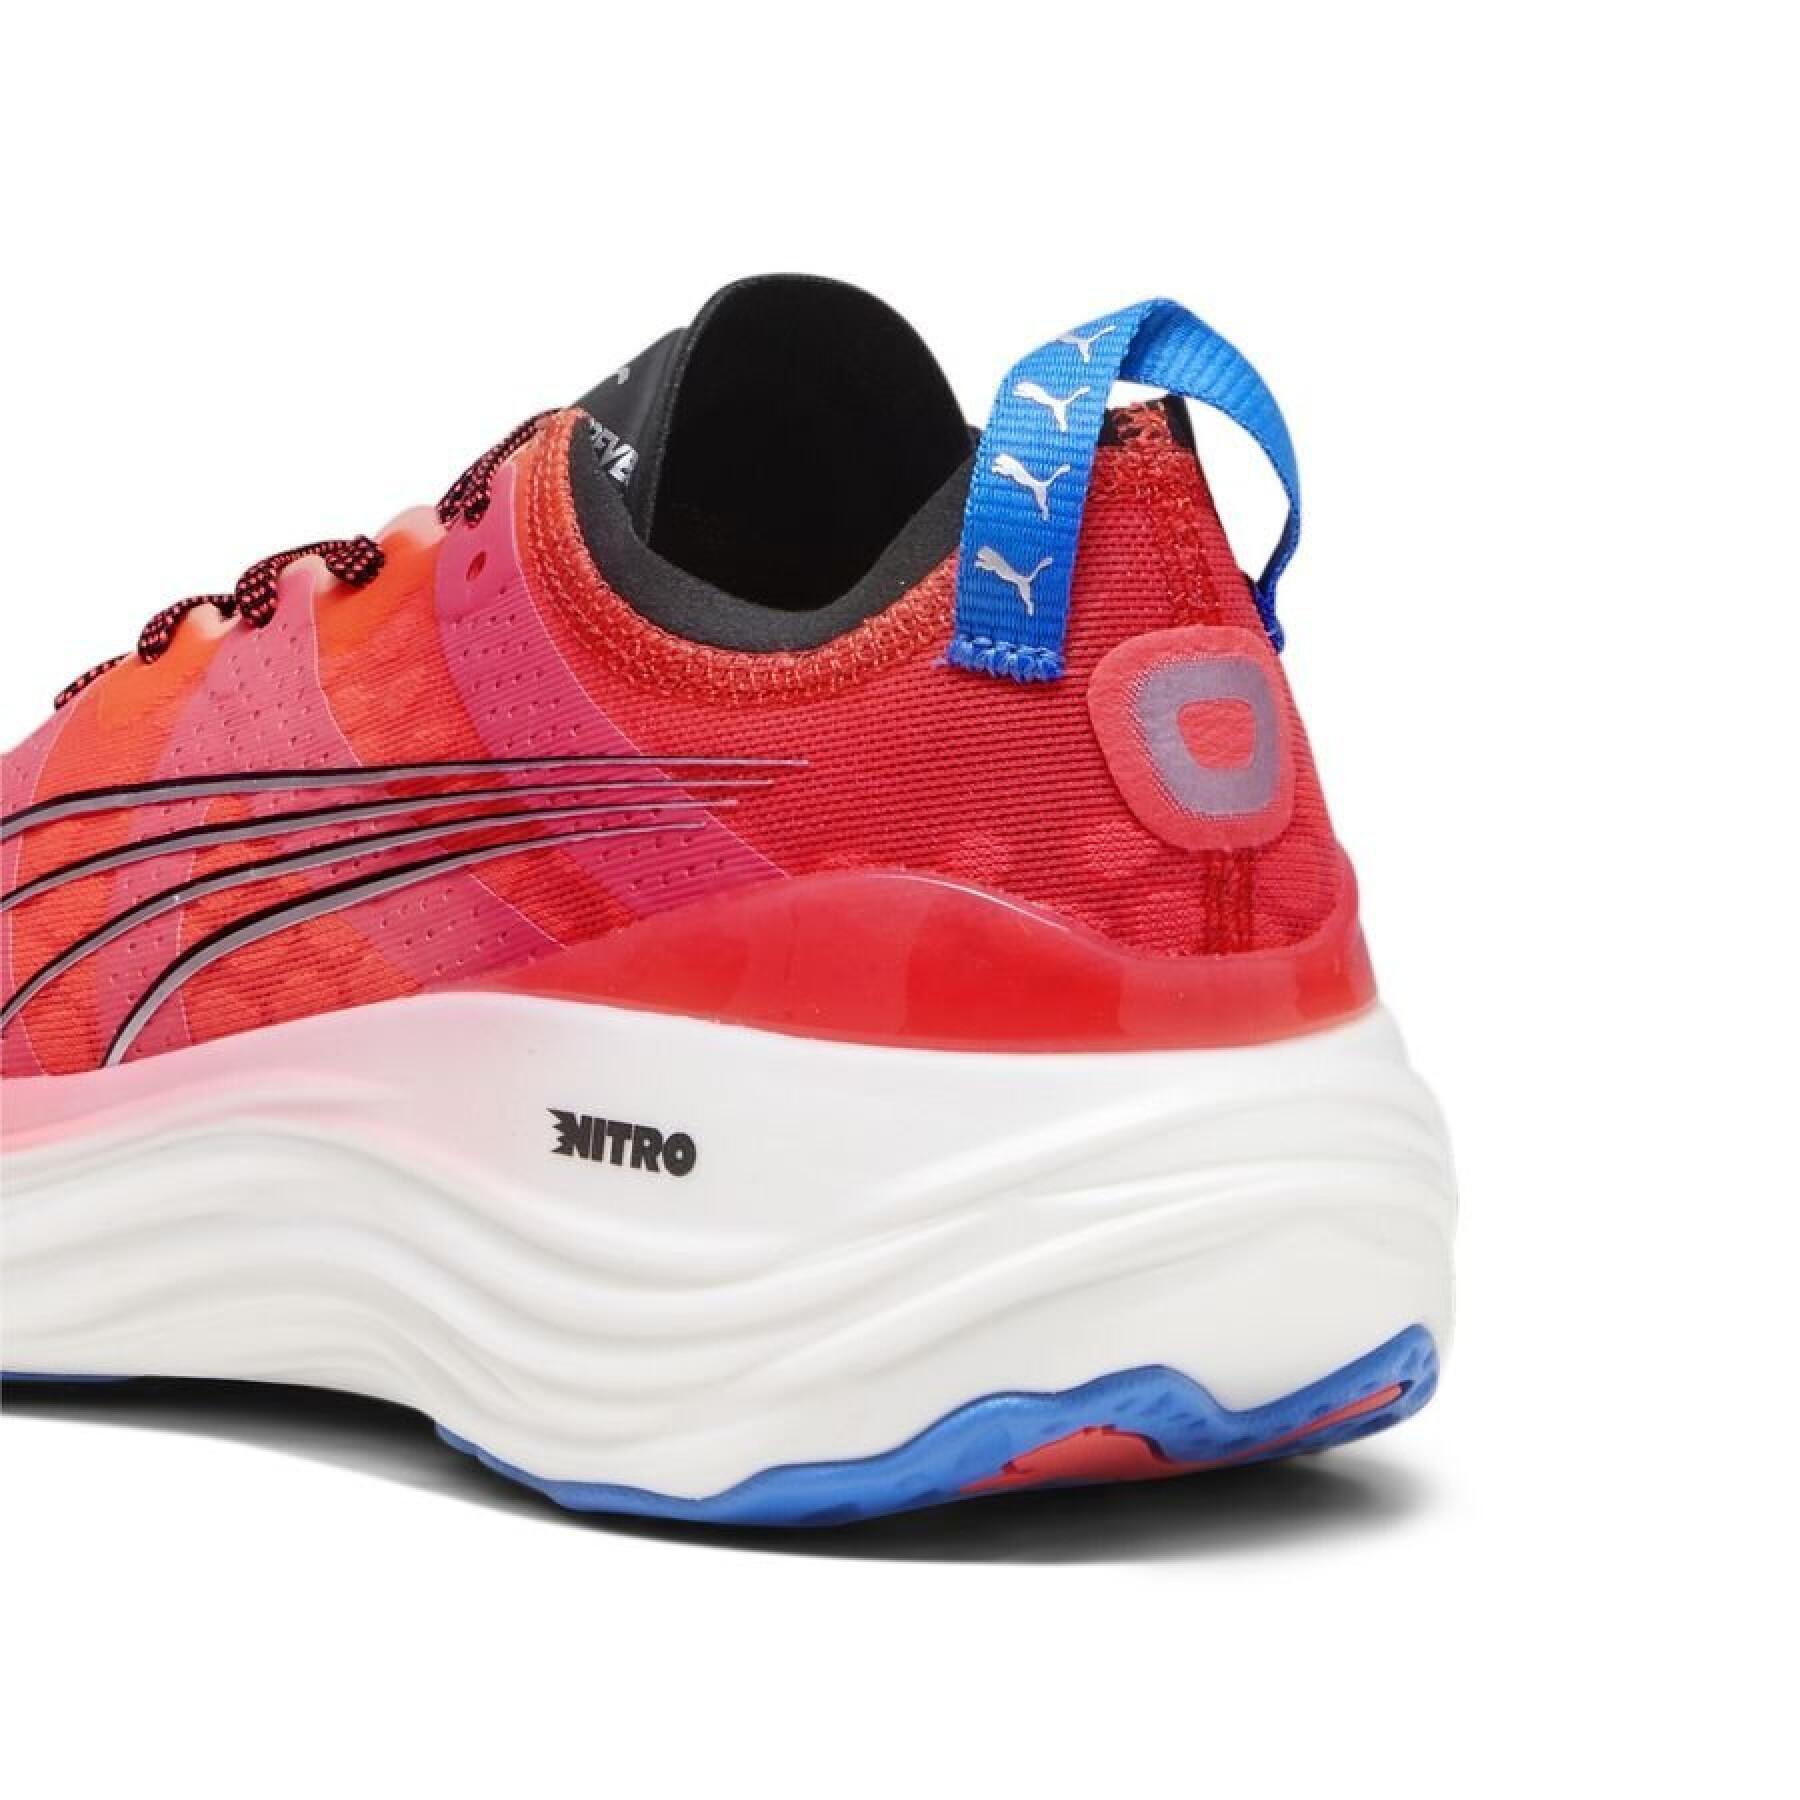 Sneakers Puma Forever run Nitro